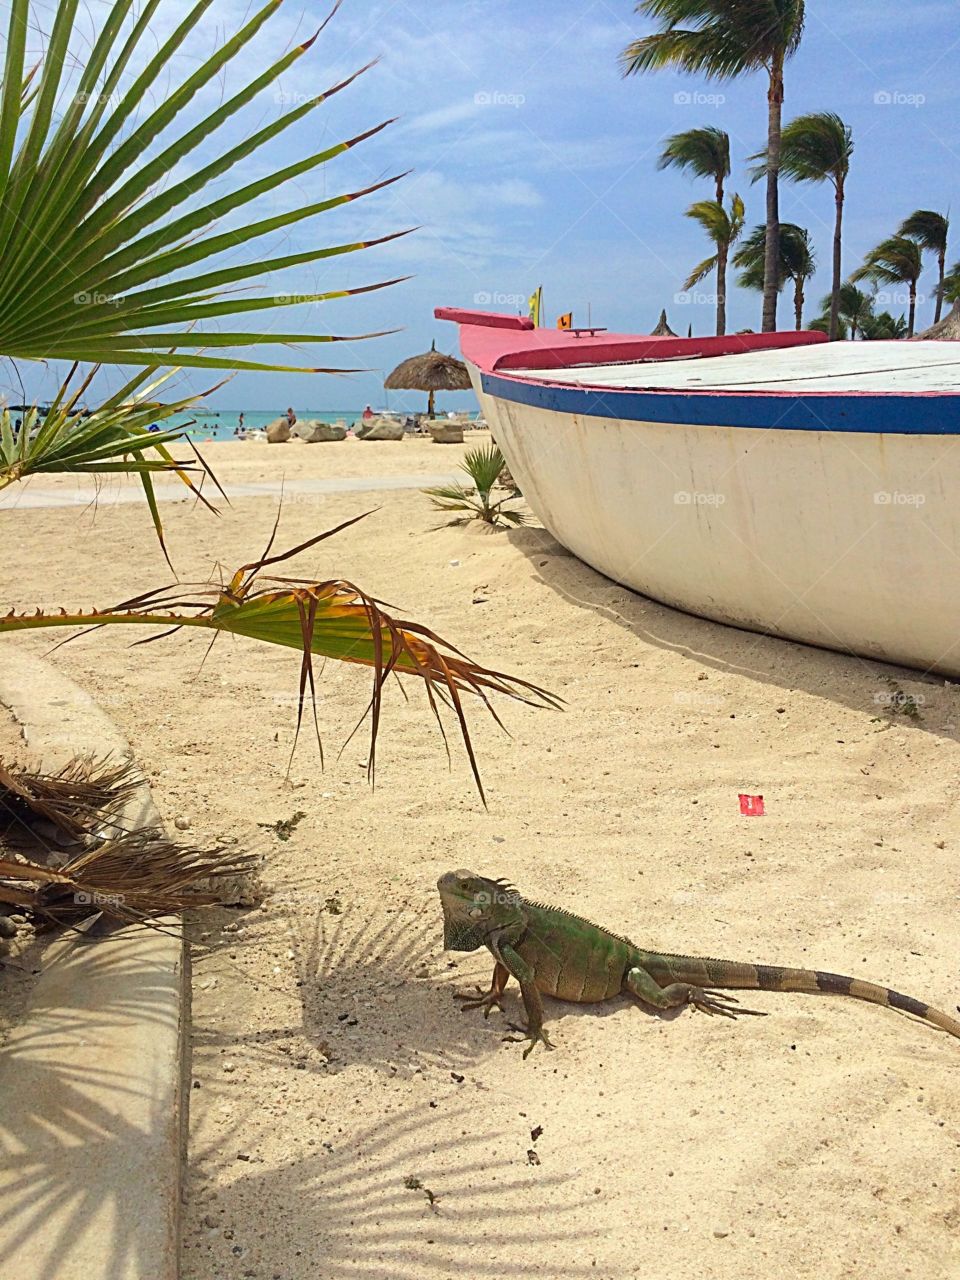 Iguana Beach. Iguana on the sand in Aruba. 